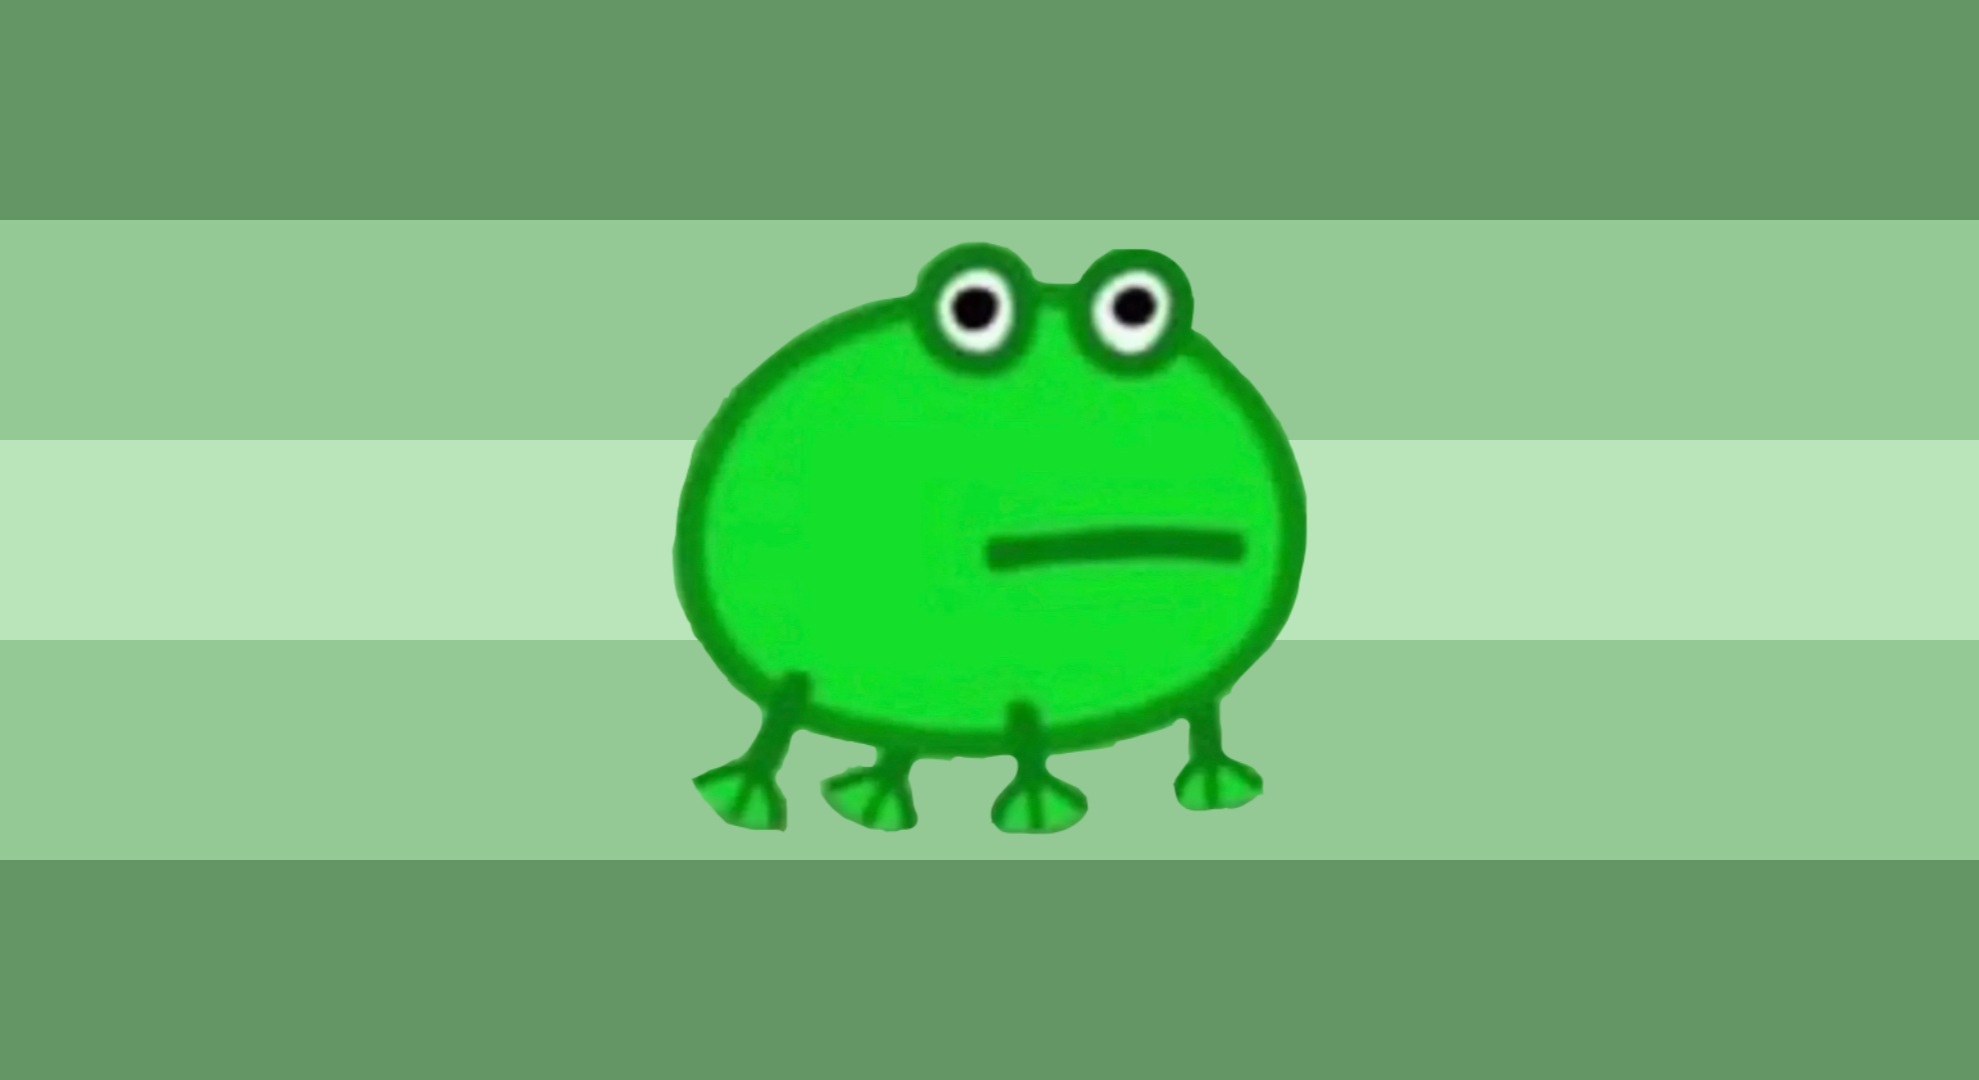 Включи канал frog. Лягушка на зелёном фоне. Лягушка из мультика Пеппа. Лягушка из мультика Свинка Пеппа. Зеленая лягушка на зеленом фоне.